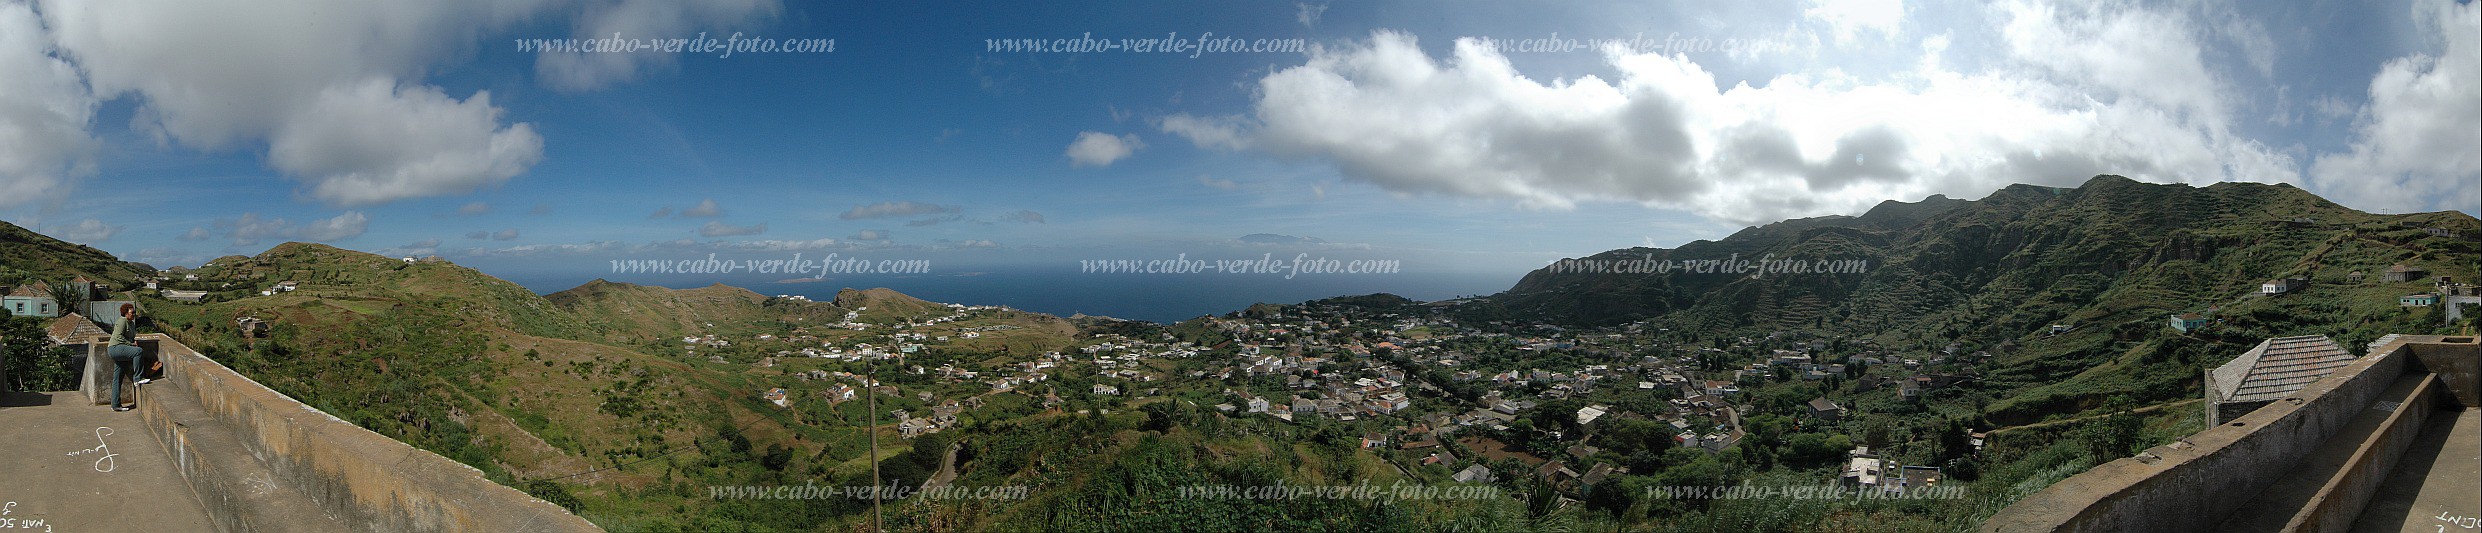 Brava : Vila Nova Sintra : town : LandscapeCabo Verde Foto Gallery